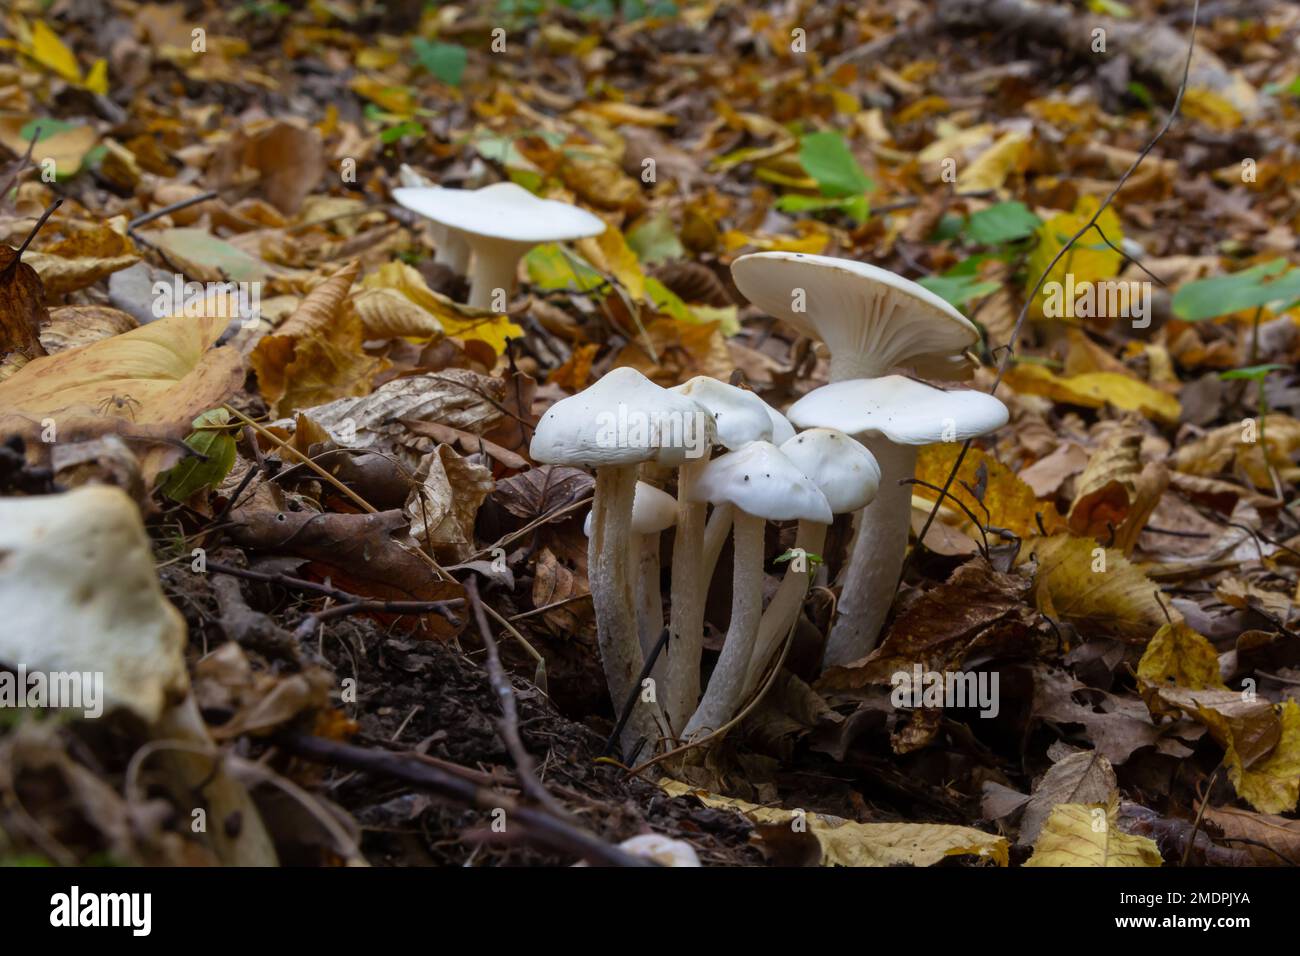 Ivory Woodwax Fungi - Hygrophorus eburneus, growing in Beech leaf litter. Stock Photo